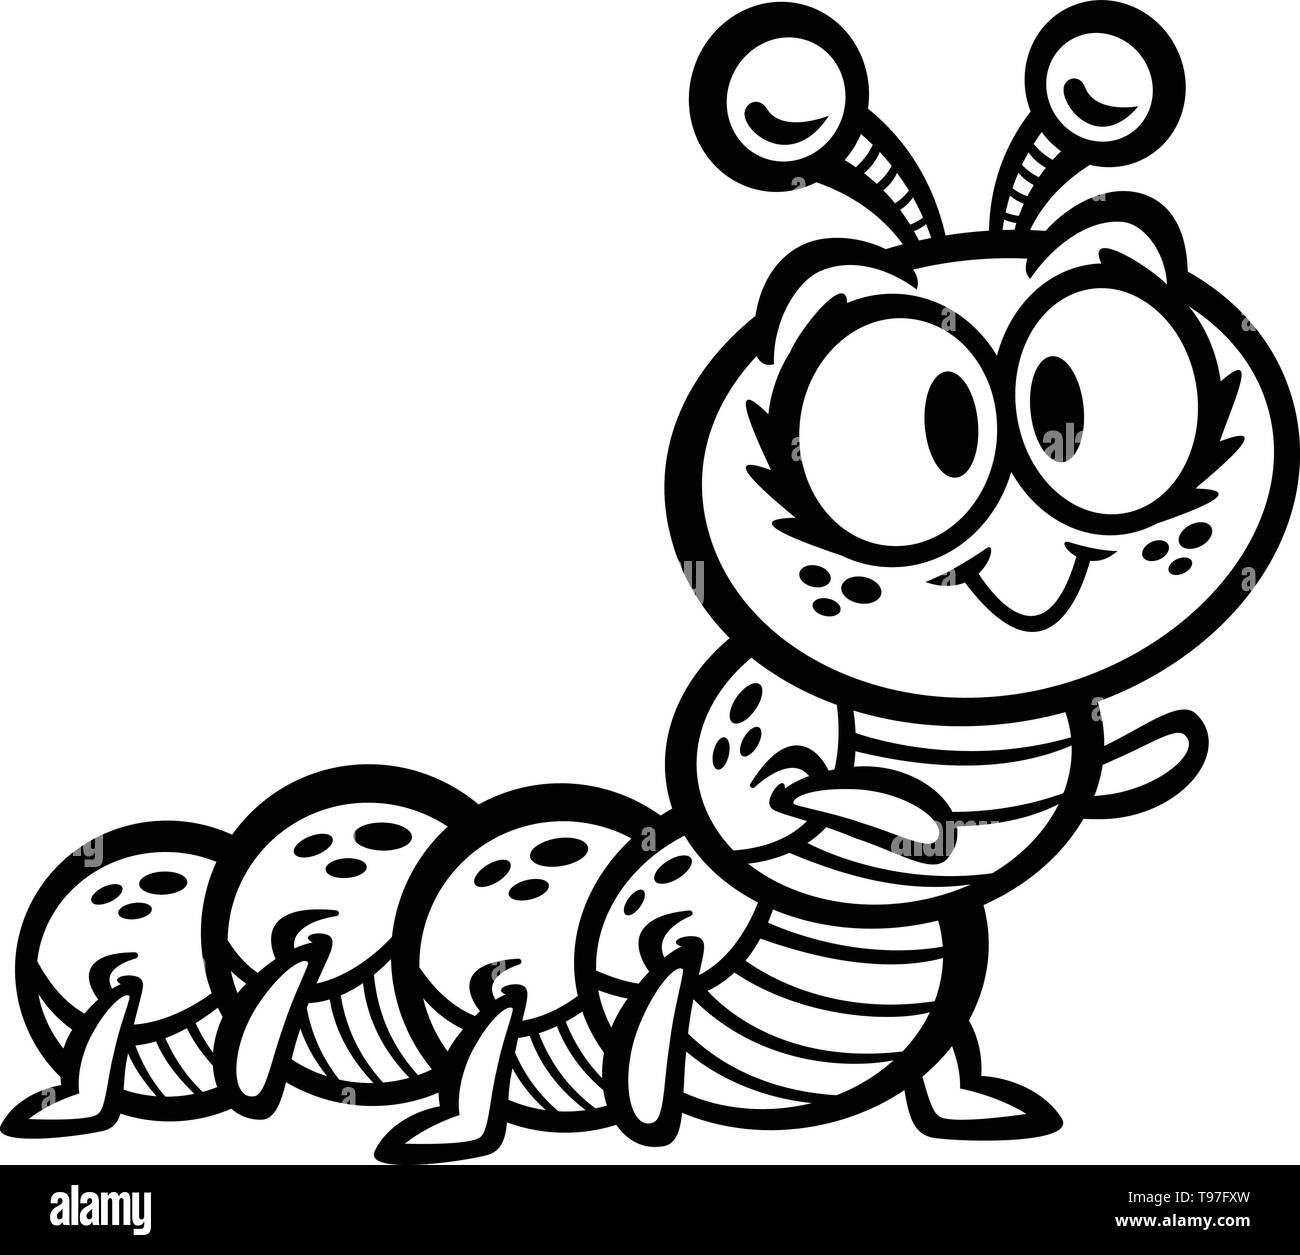 Cute Crawling Caterpillar Bug cartoon Stock Vector Image & Art - Alamy